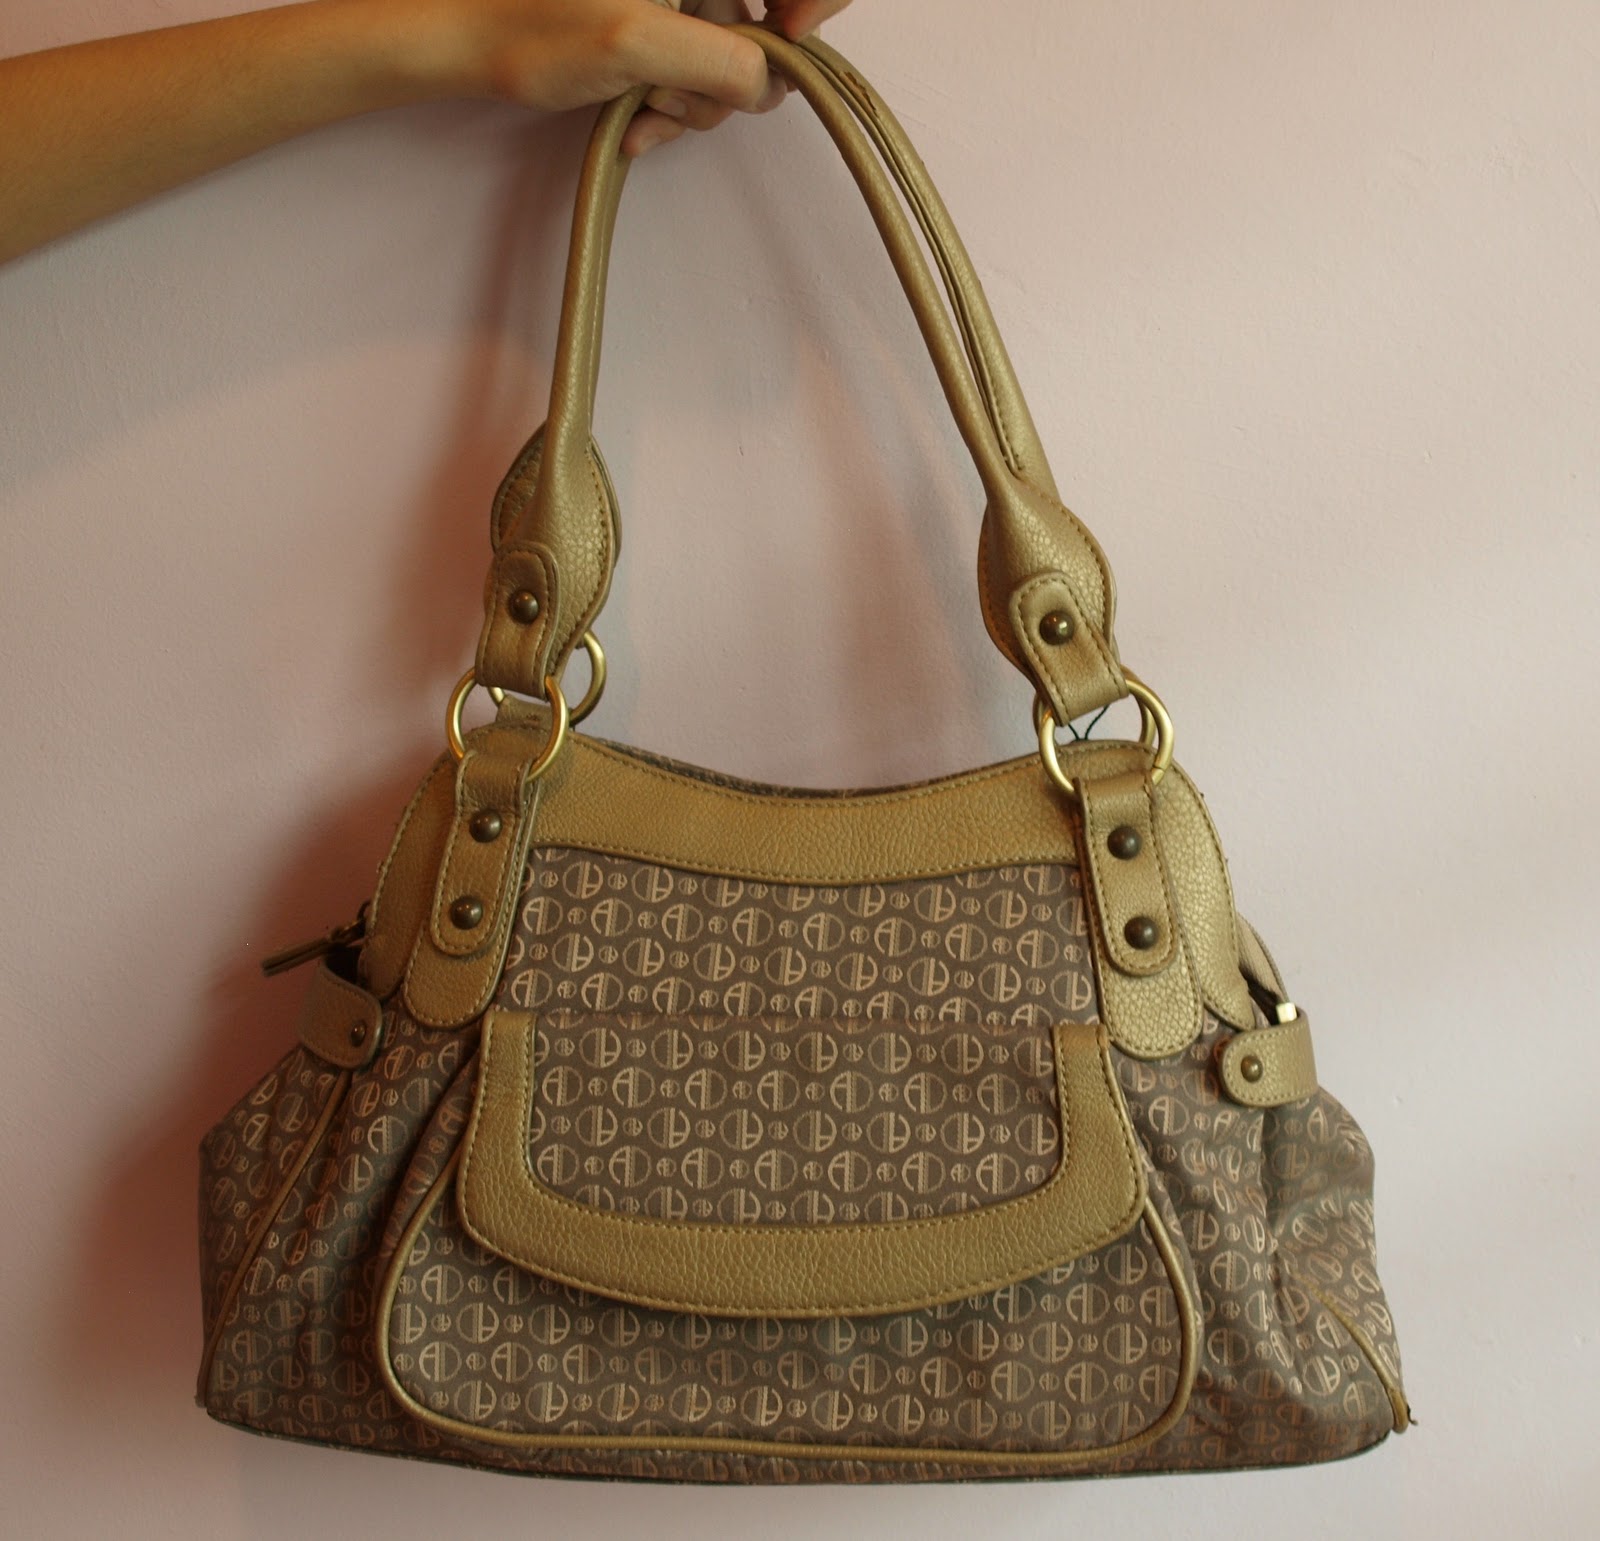 Ravishing Clothes!: Handbags for Sale!